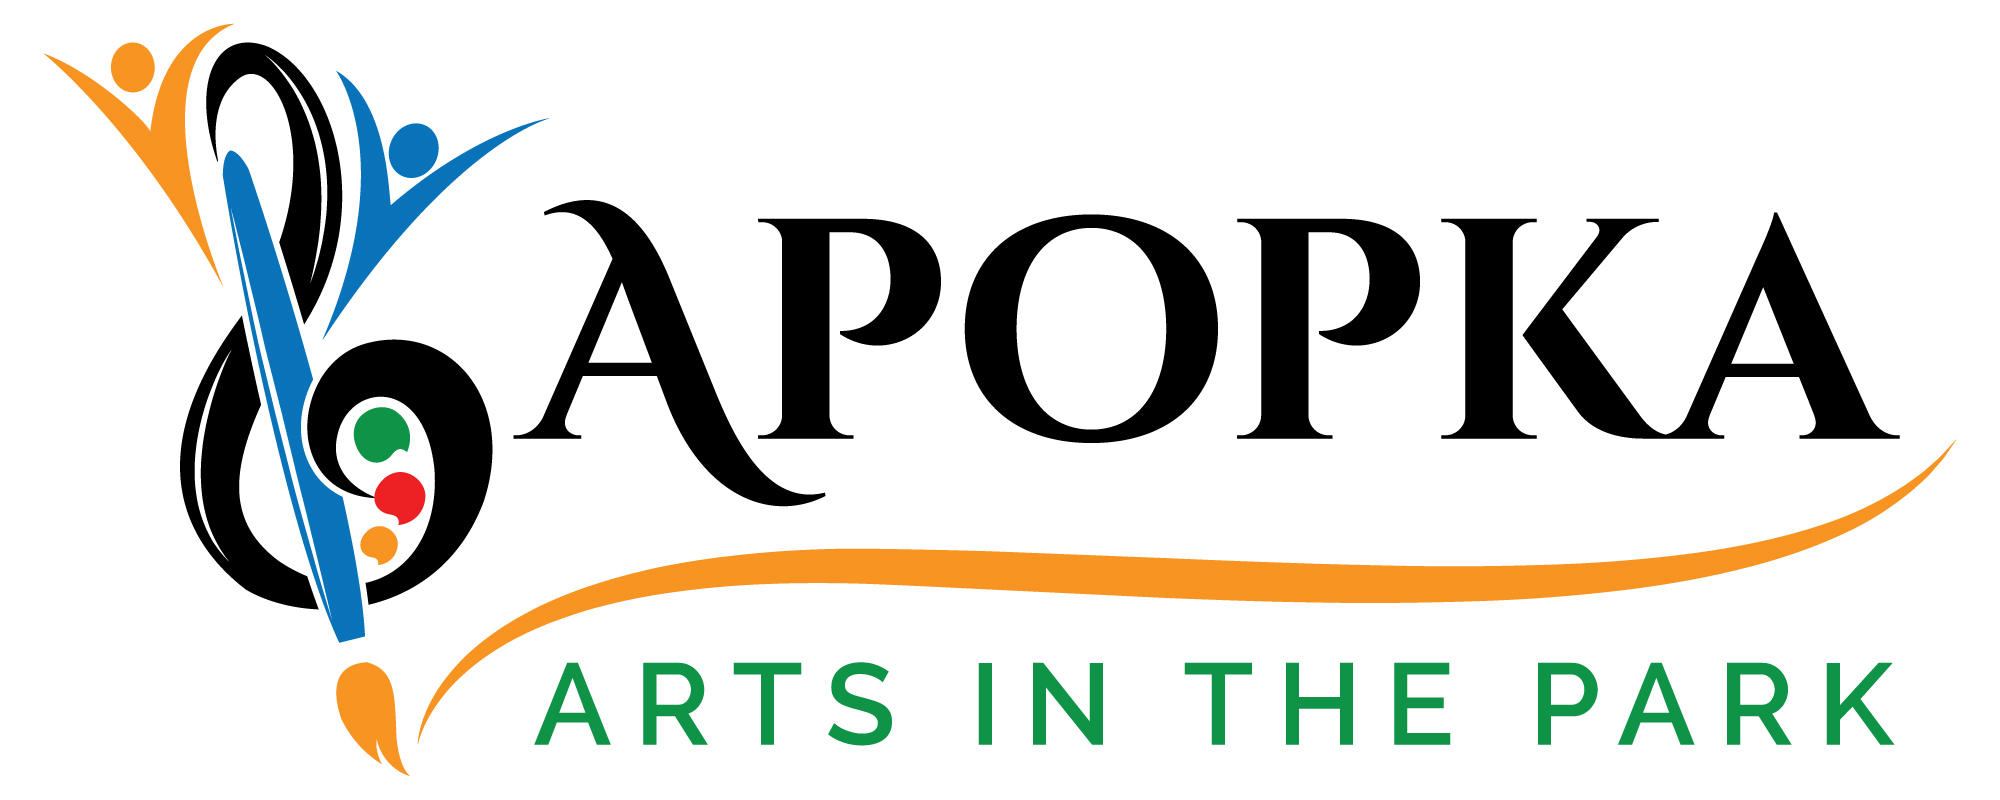 Celebrate the Arts in Apopka, Florida!